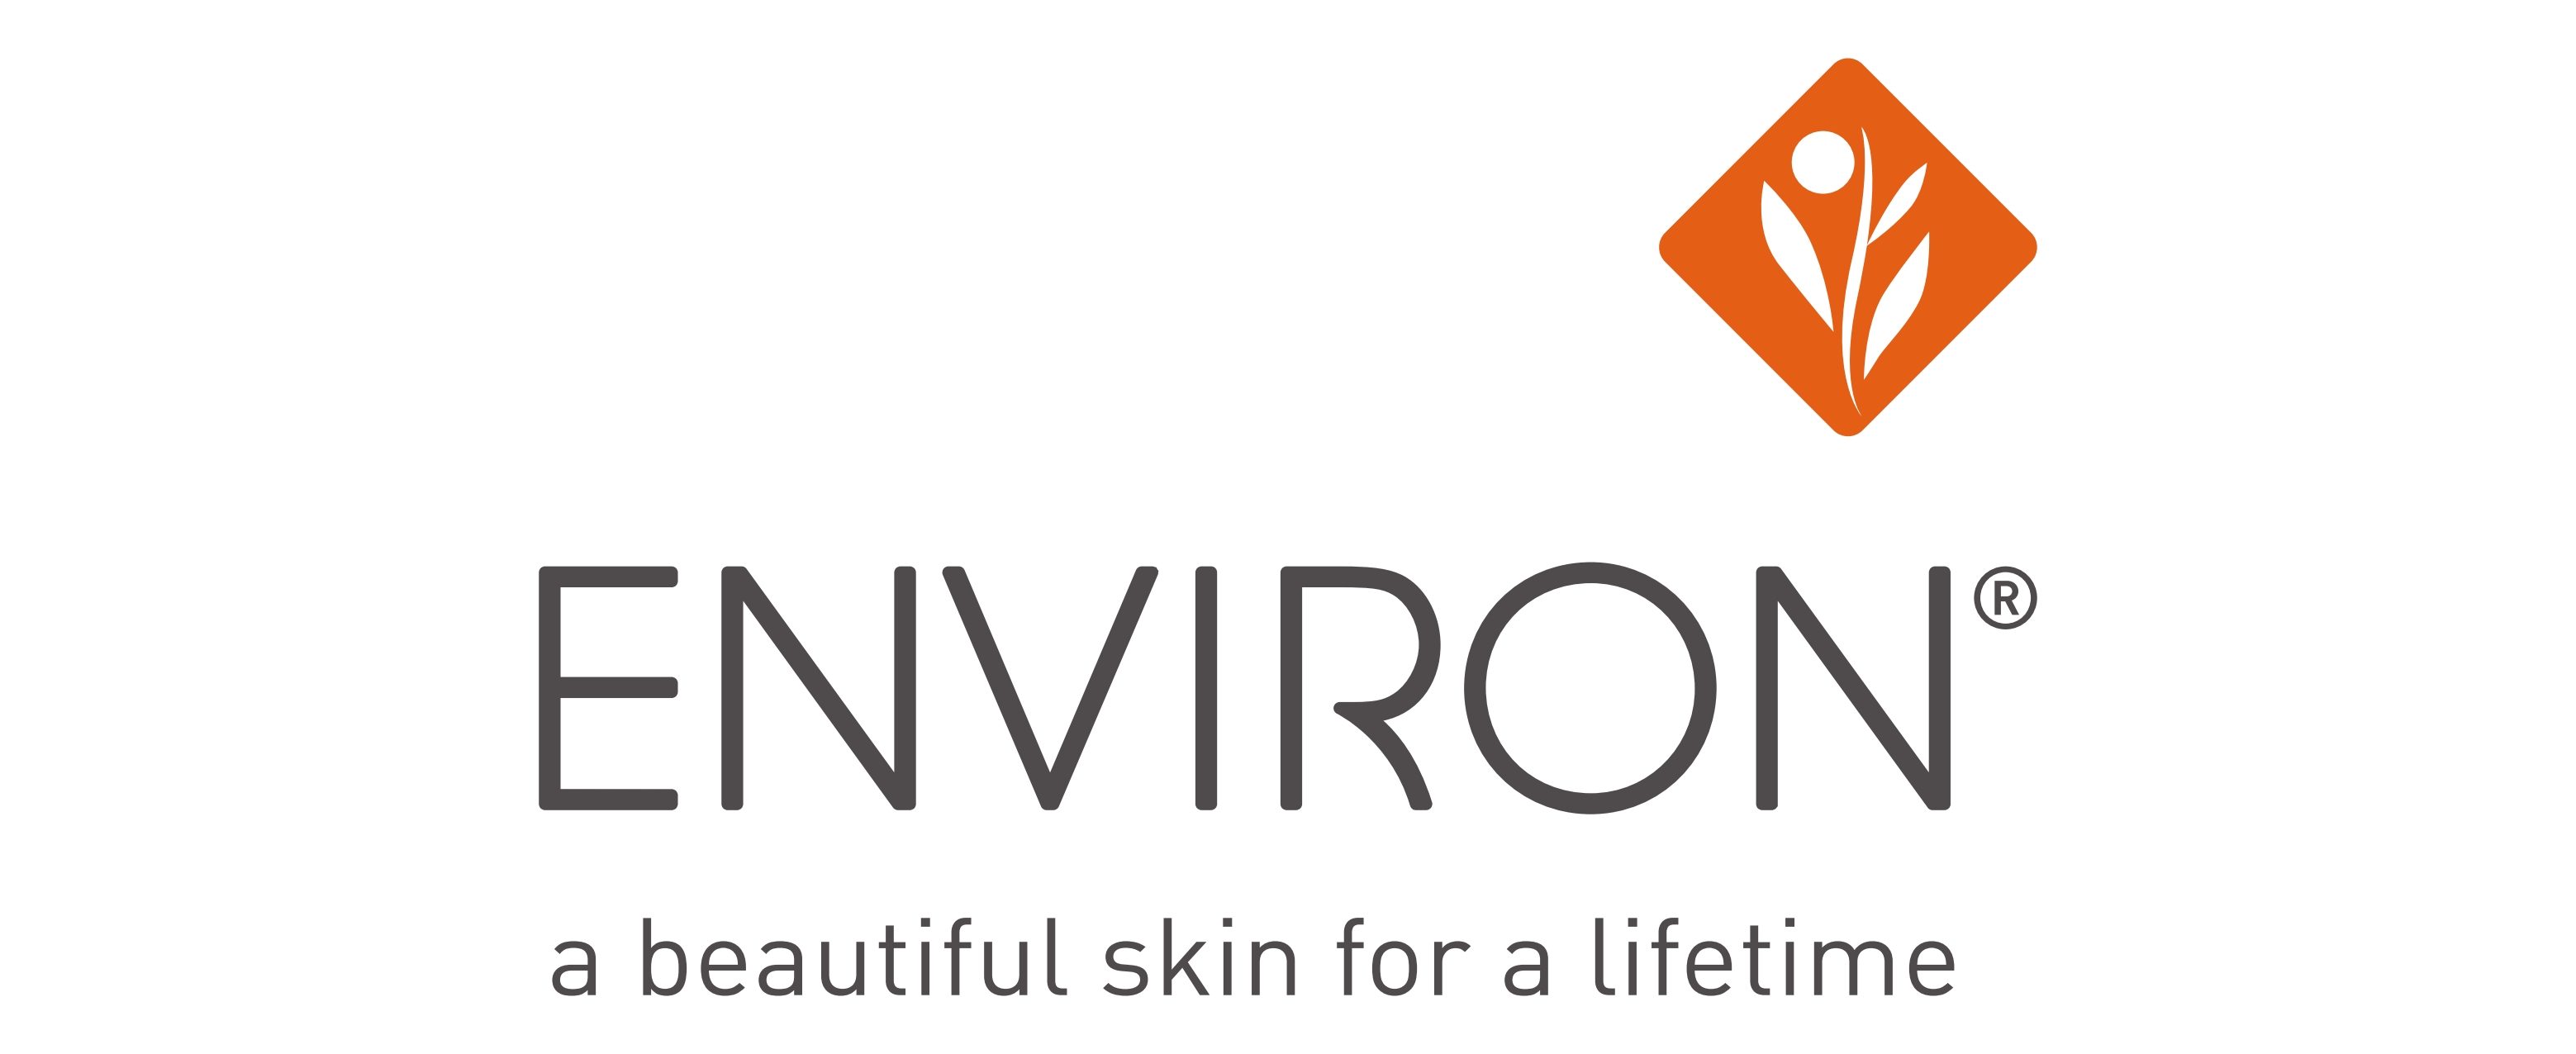 ENVIRON LOGO a beautiful skin for a life time pdf_001